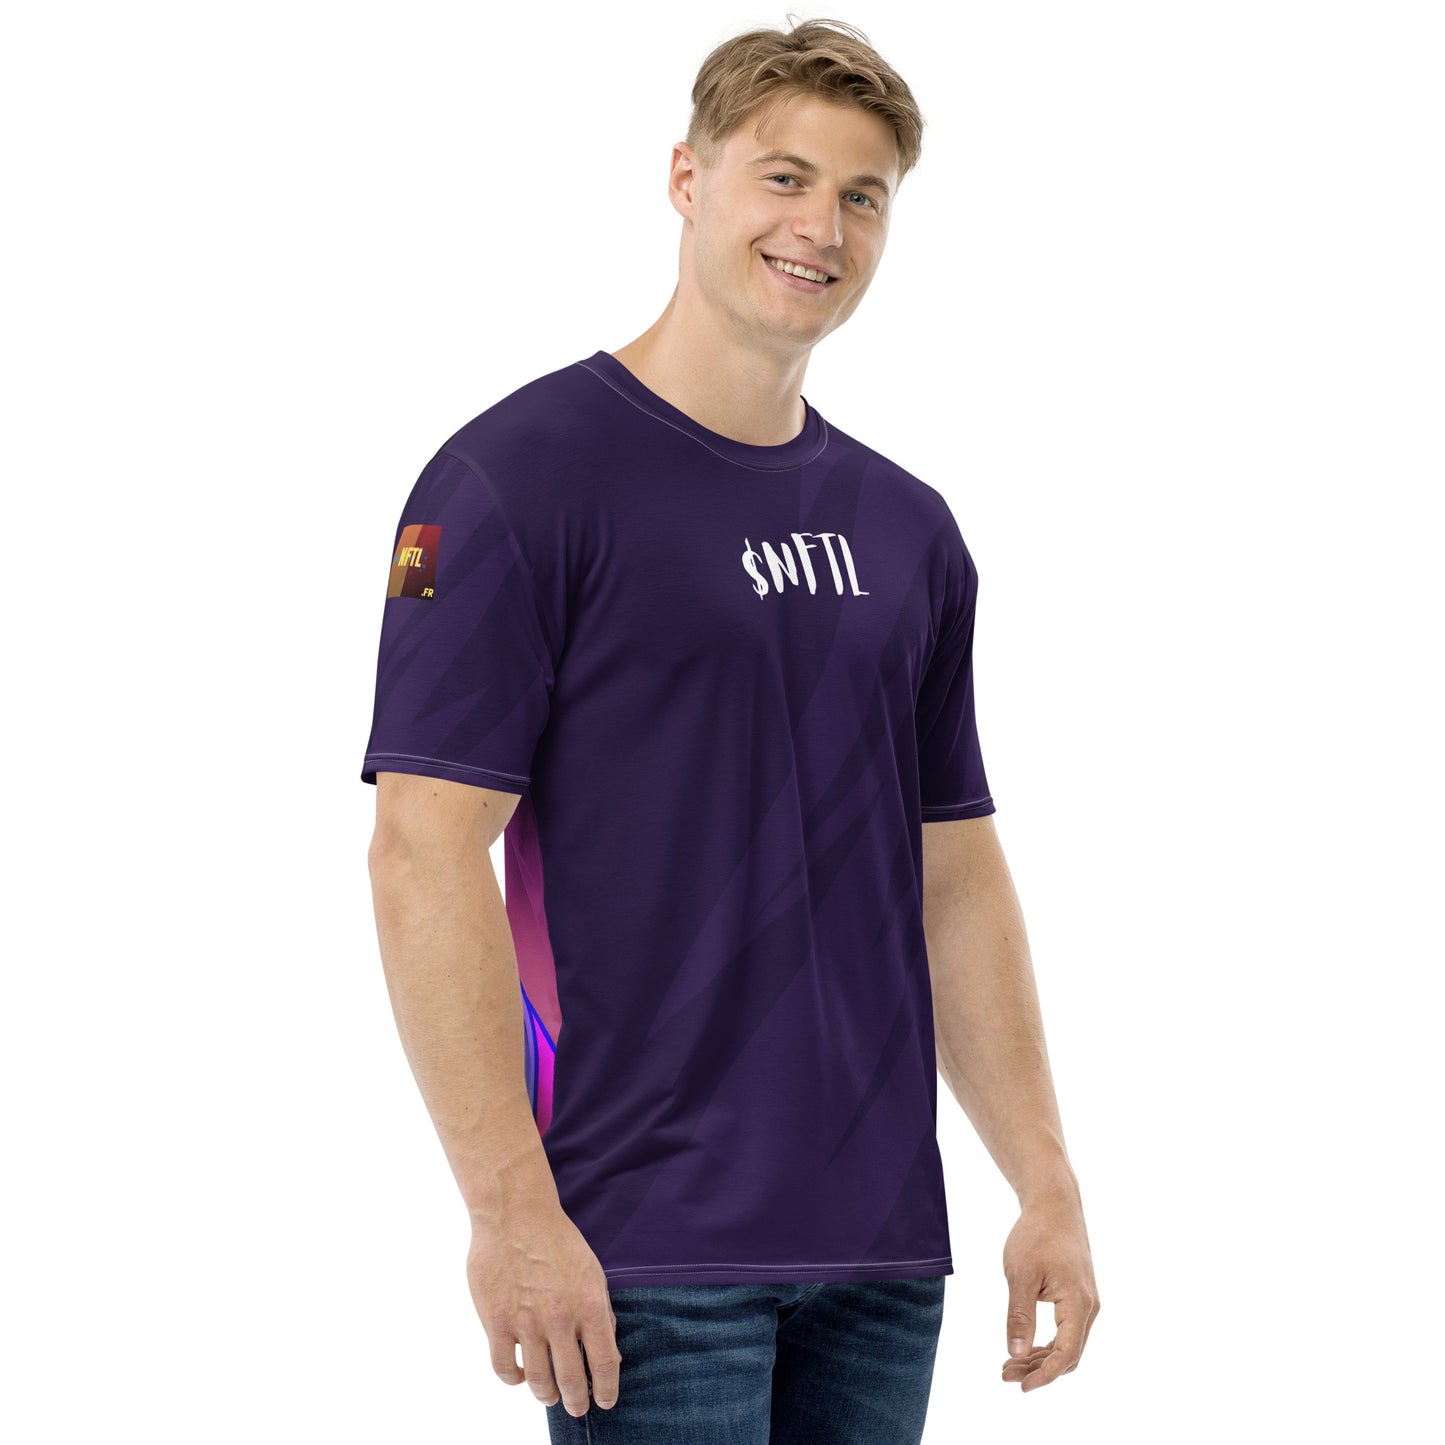 $NFTL Men's t-shirt Limited Edition #7